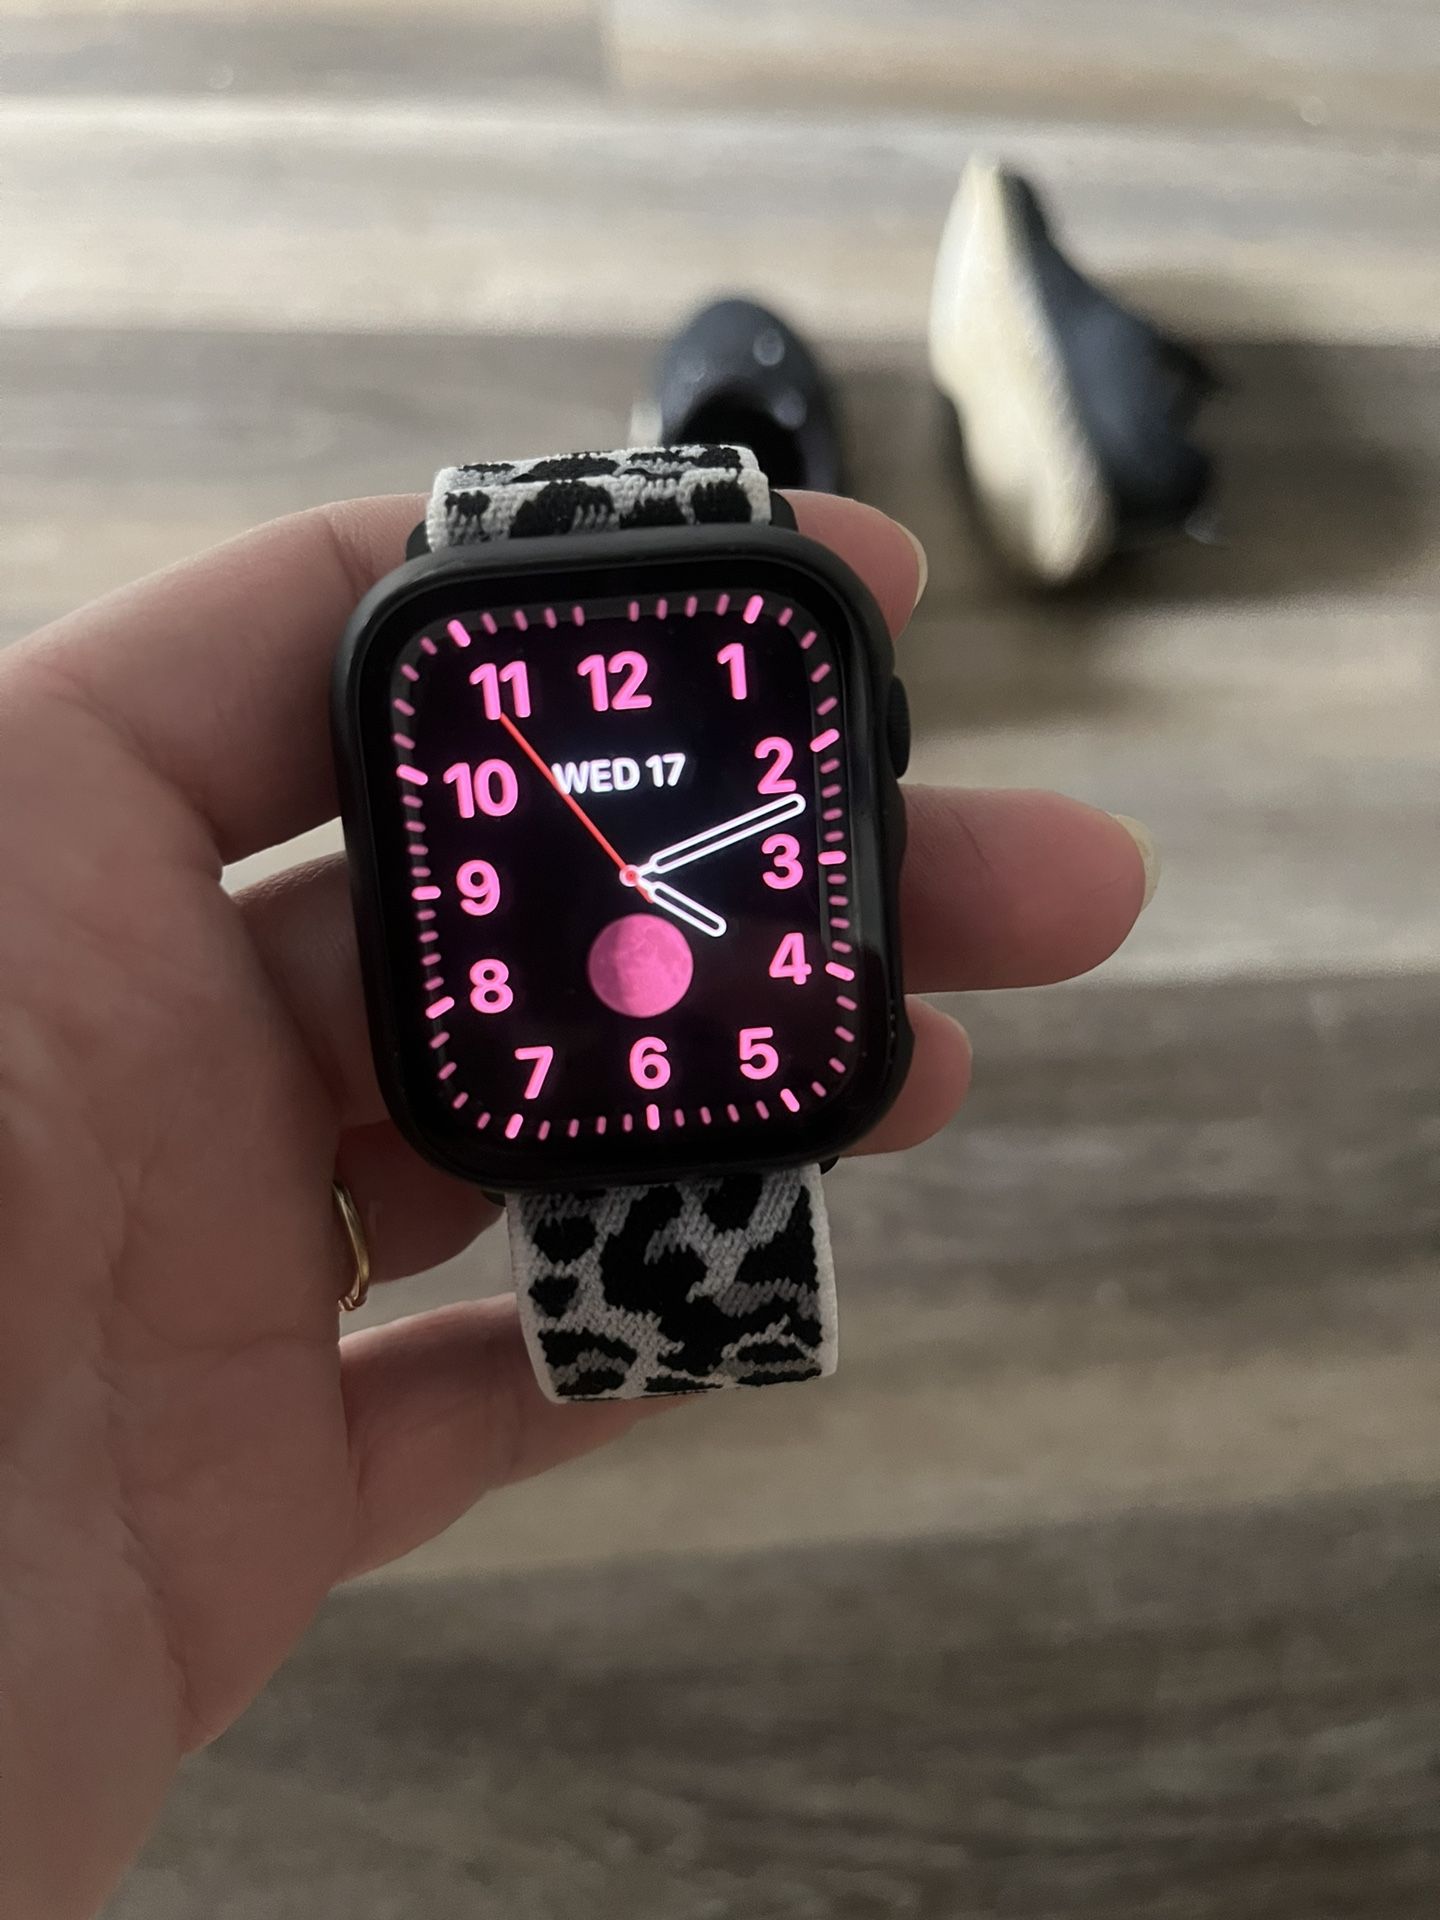 45mm Series 9 Apple Watch